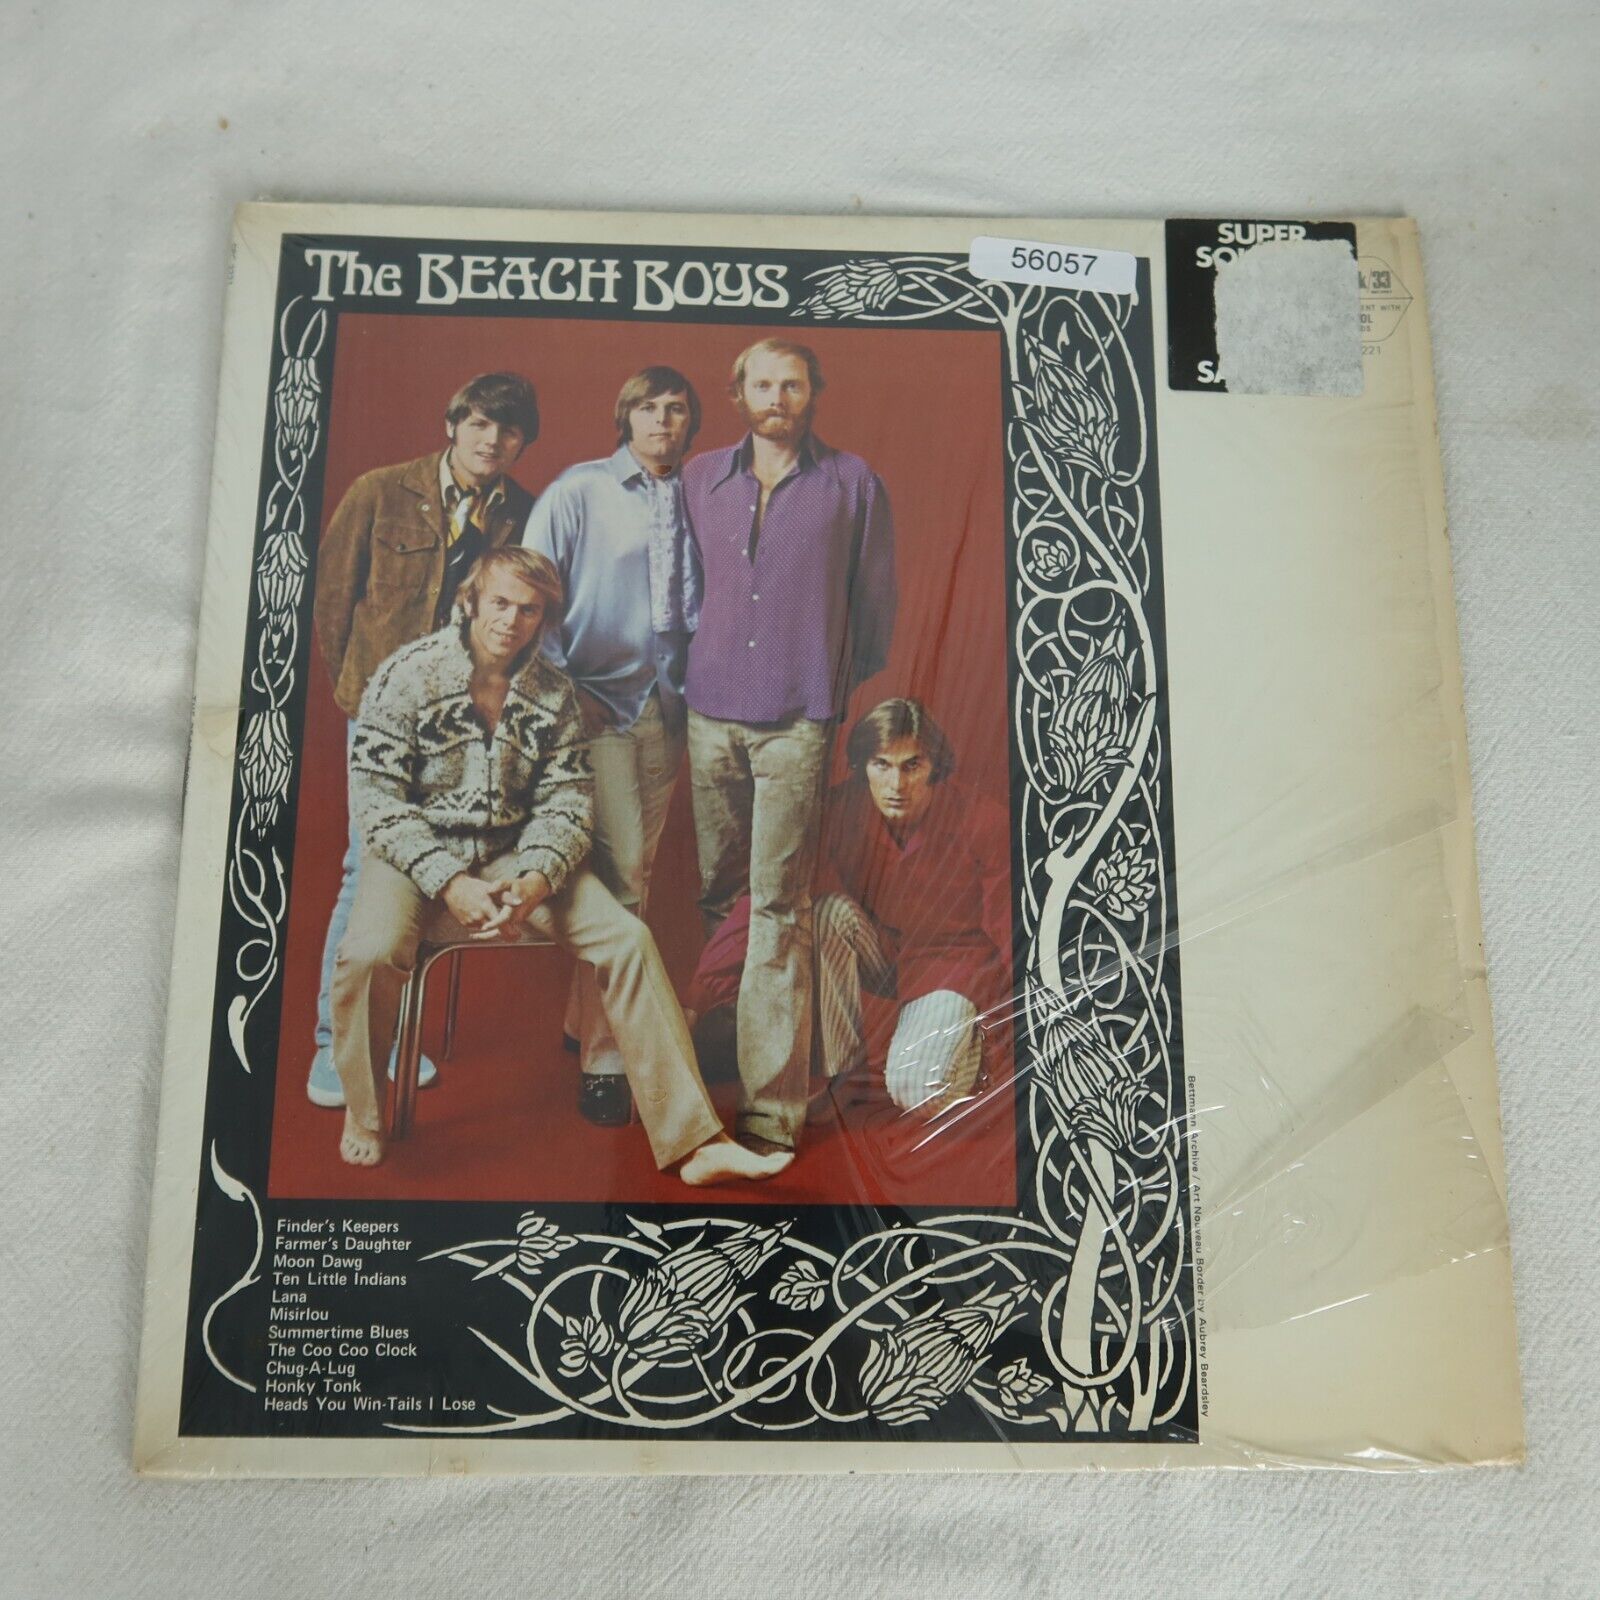 The Beach Boys Self Titled PICKWICK Spc 3221 A w/ Shrink LP Vinyl Record Album